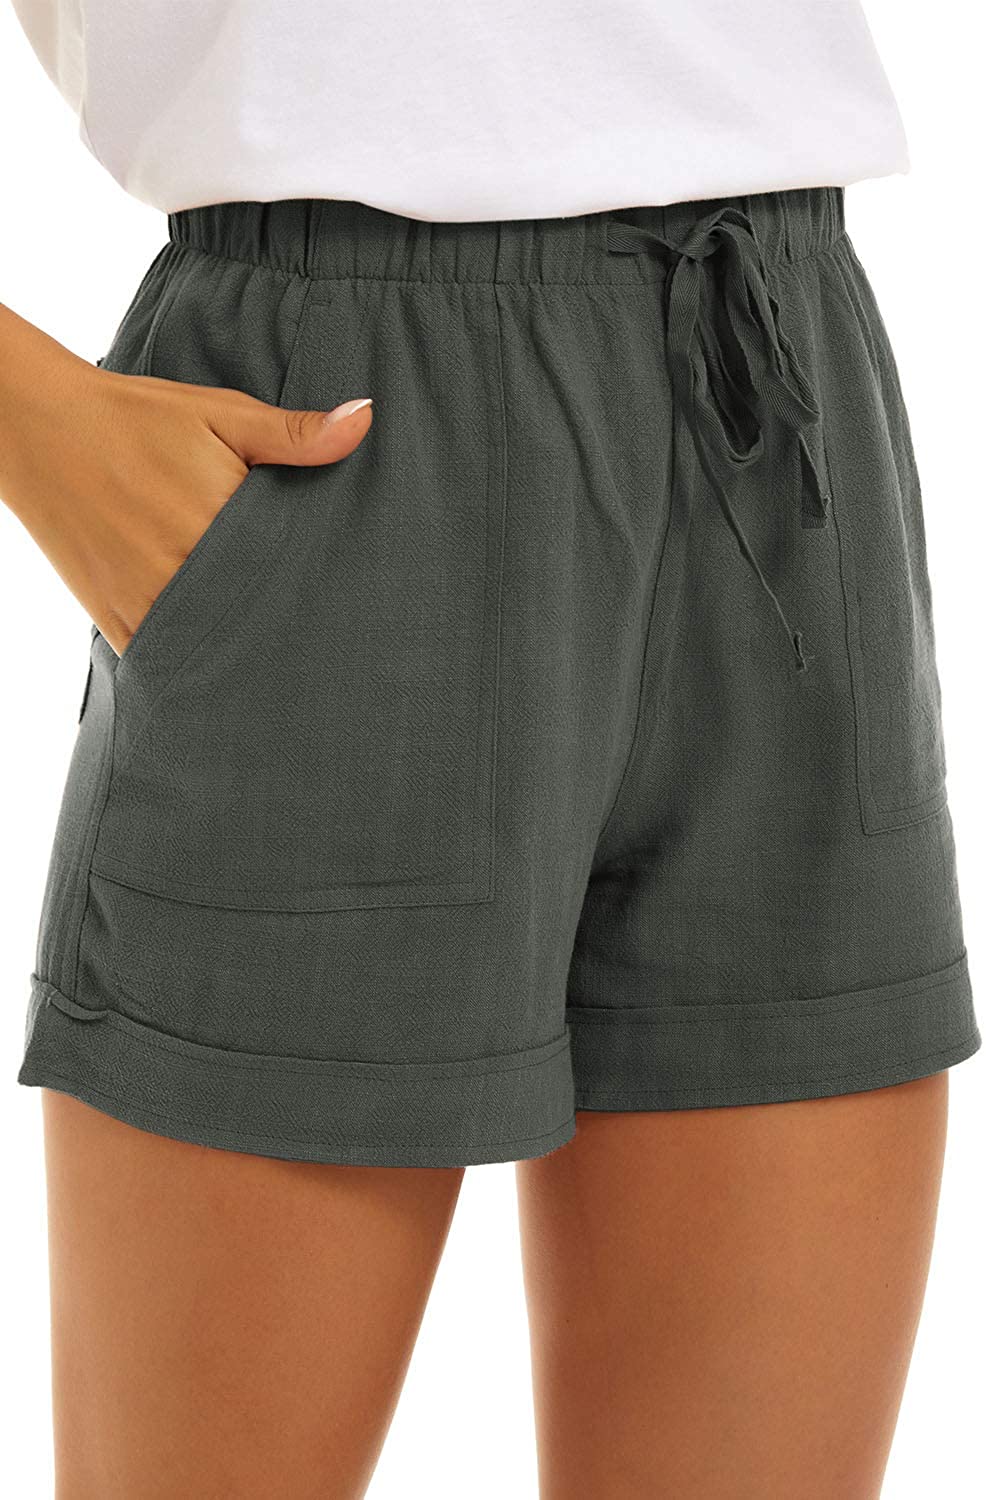 KINGFEN Shorts Womens Summer Lounge Hotpants with Pockets Drawstring Cotton Linen Shorts Fashion 